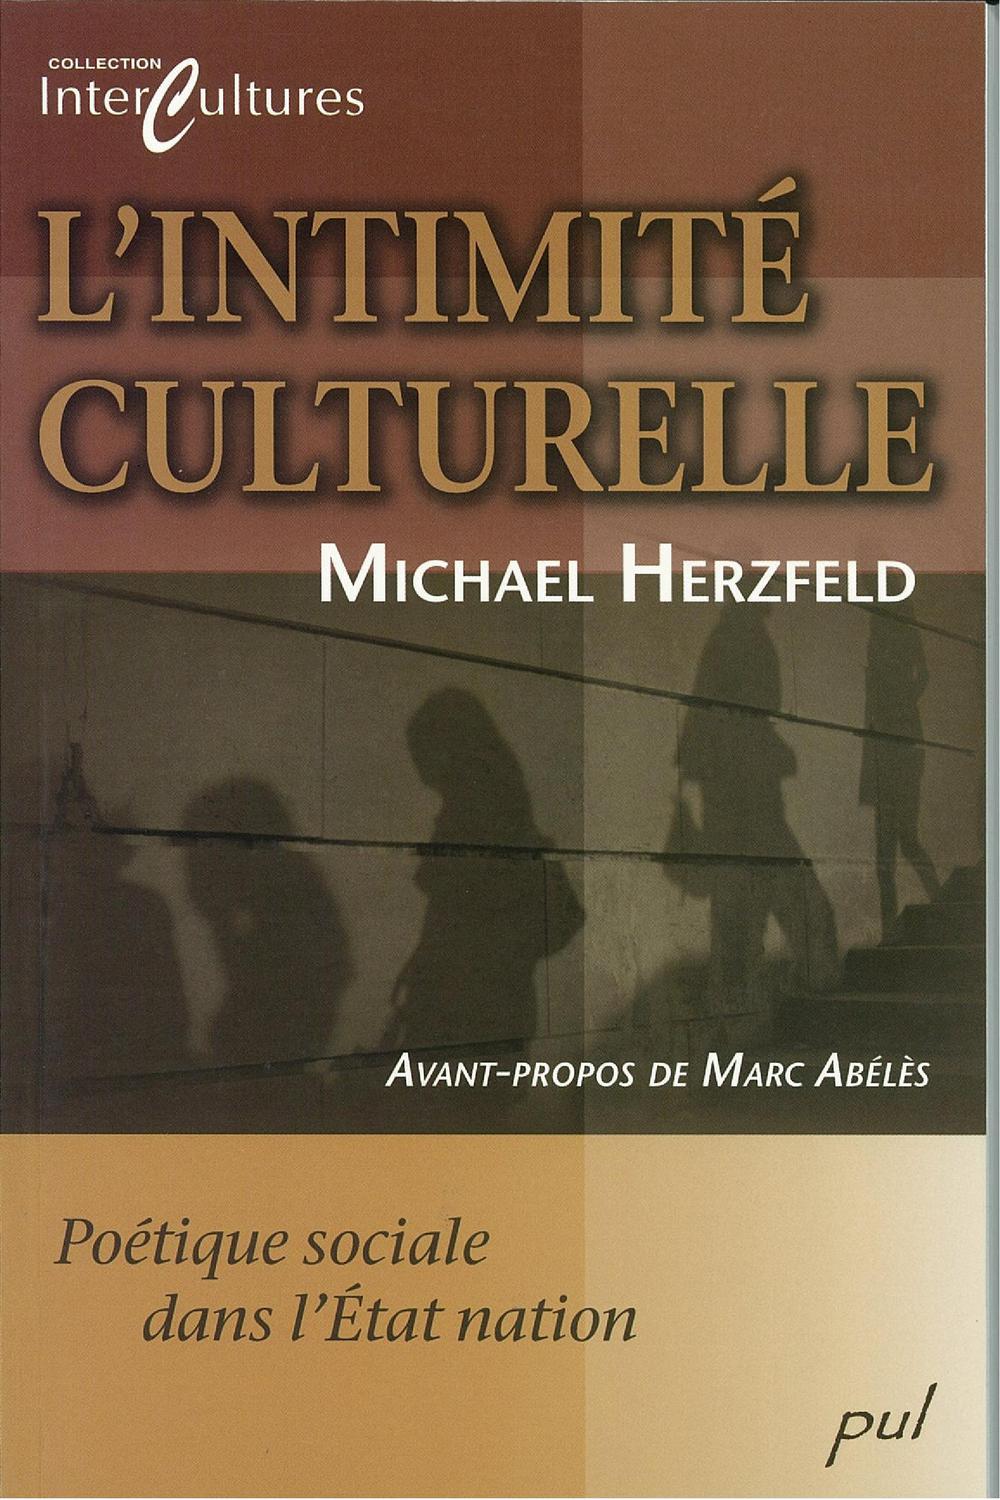 L'intimité culturelle - Michael Herzfeld